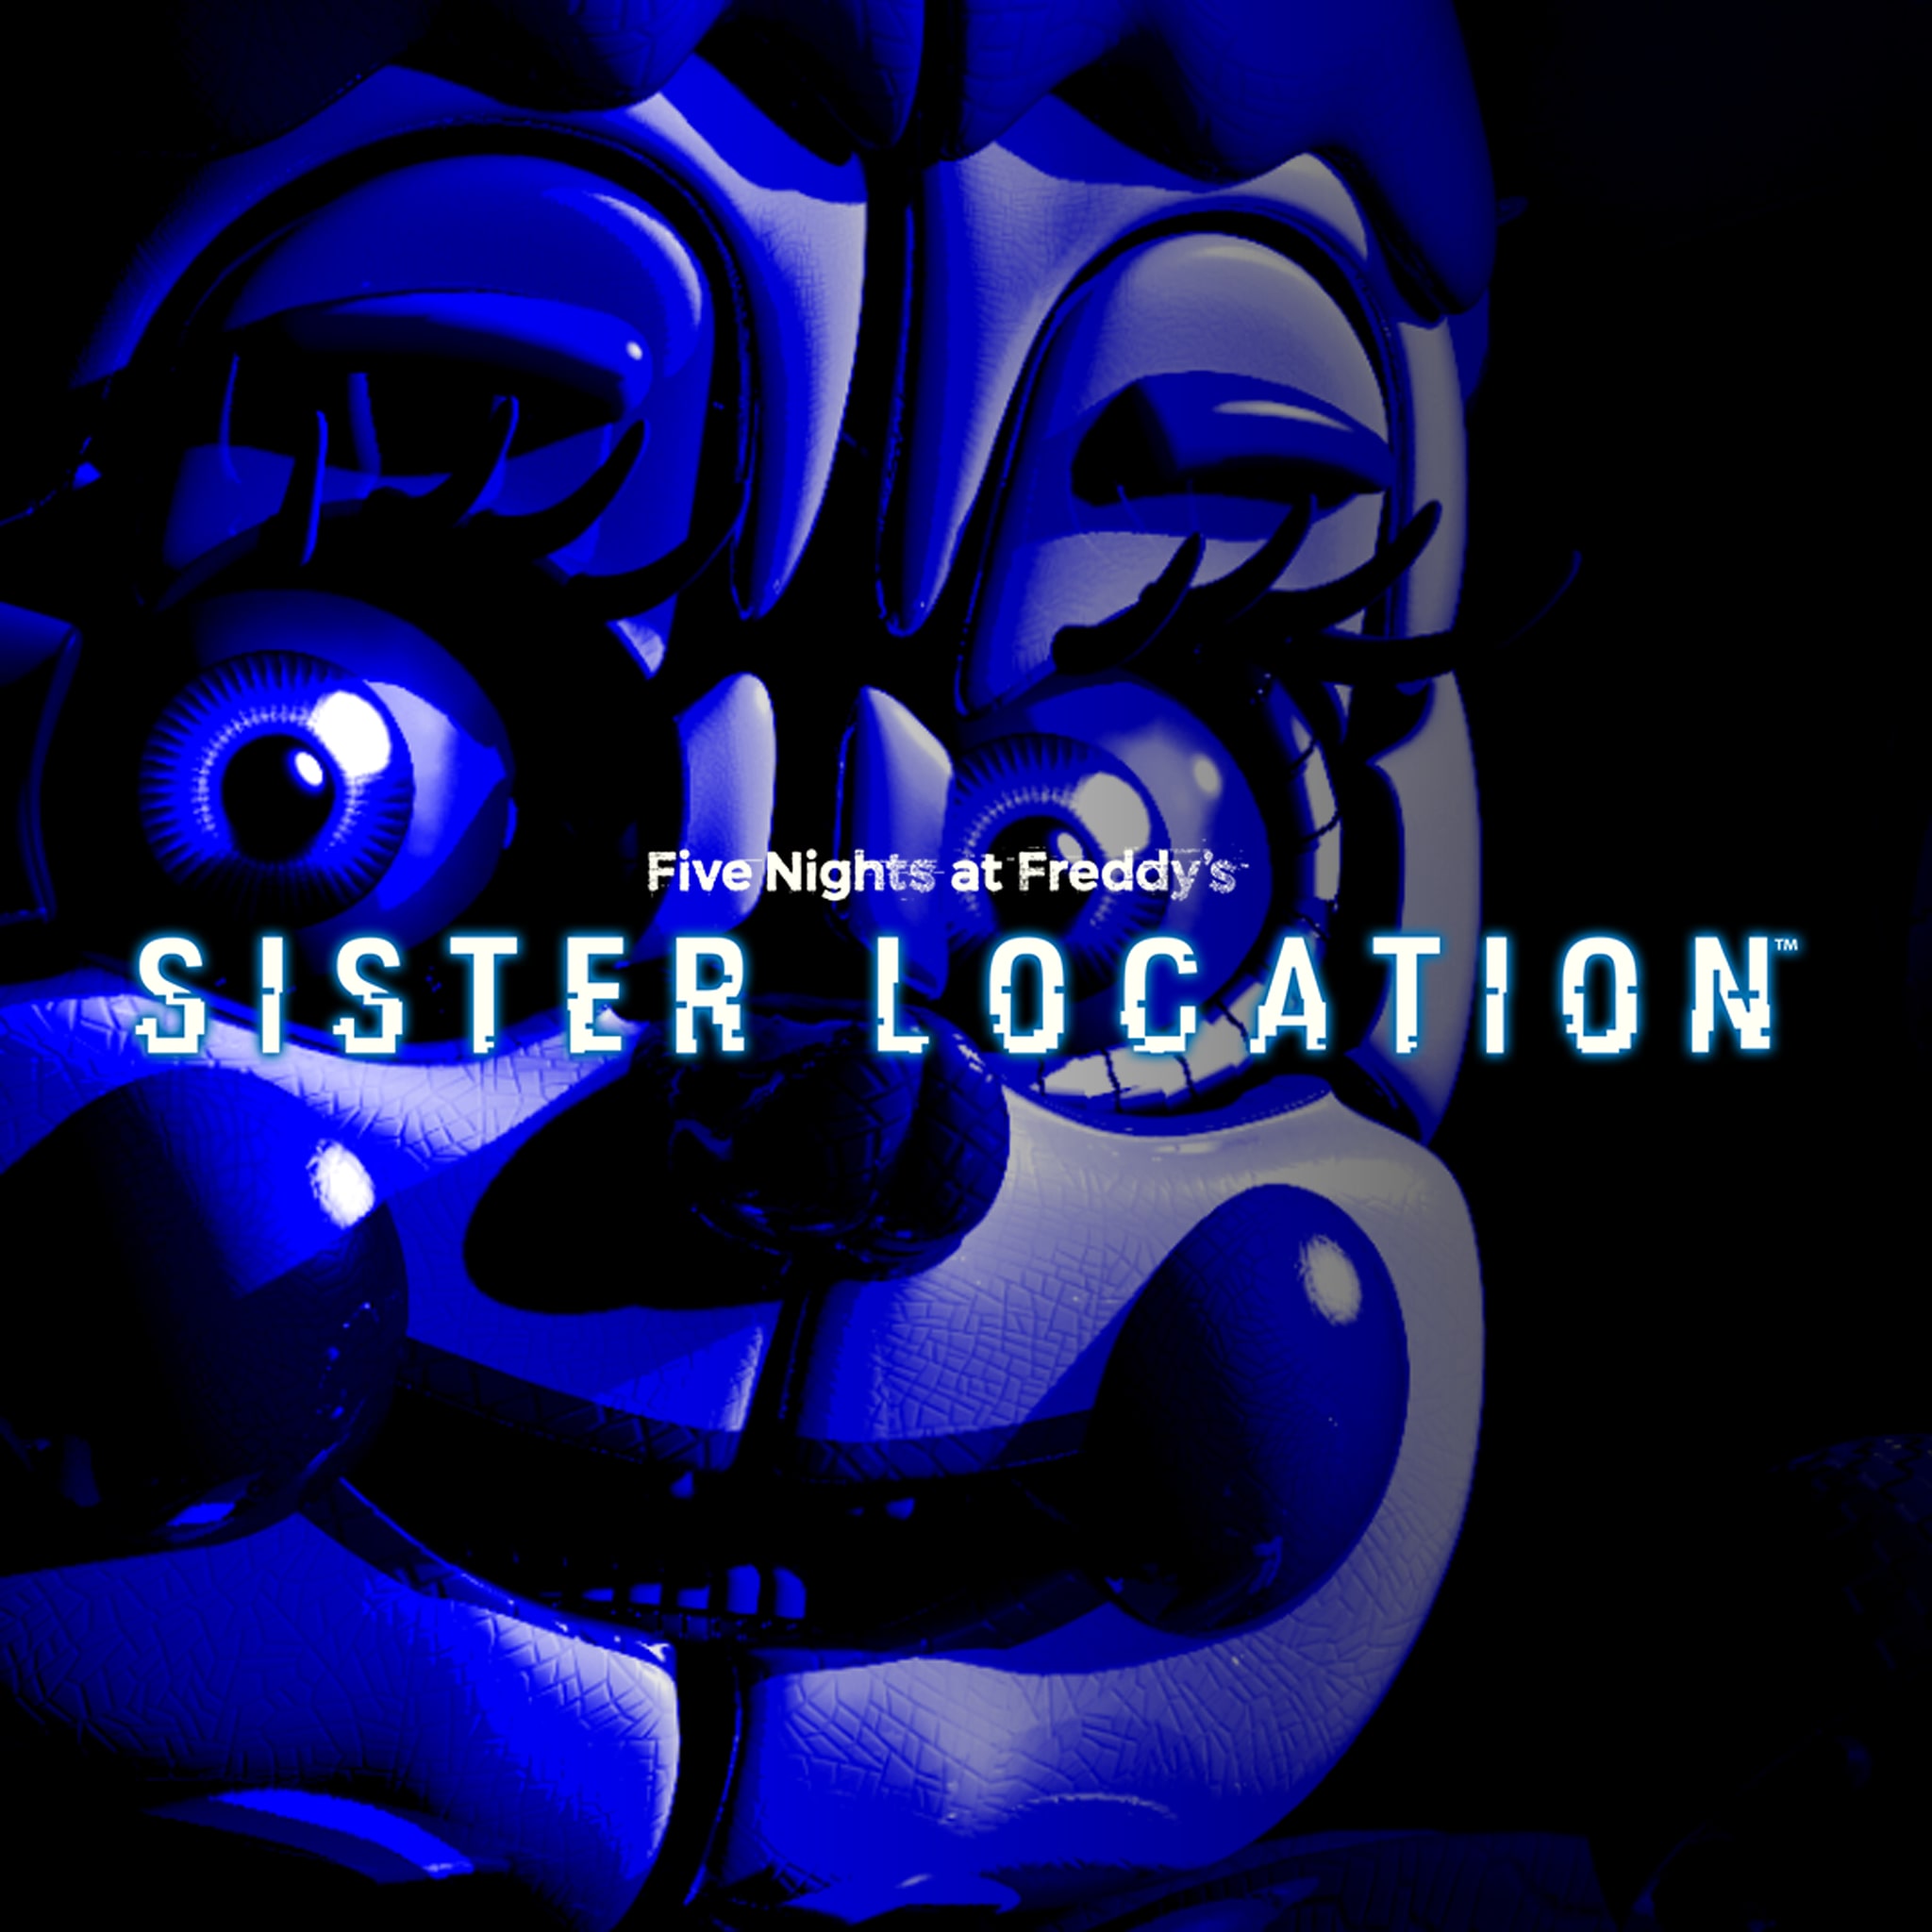 Five Nights at Freddy's 4 Five Nights at Freddy's: Sister Location